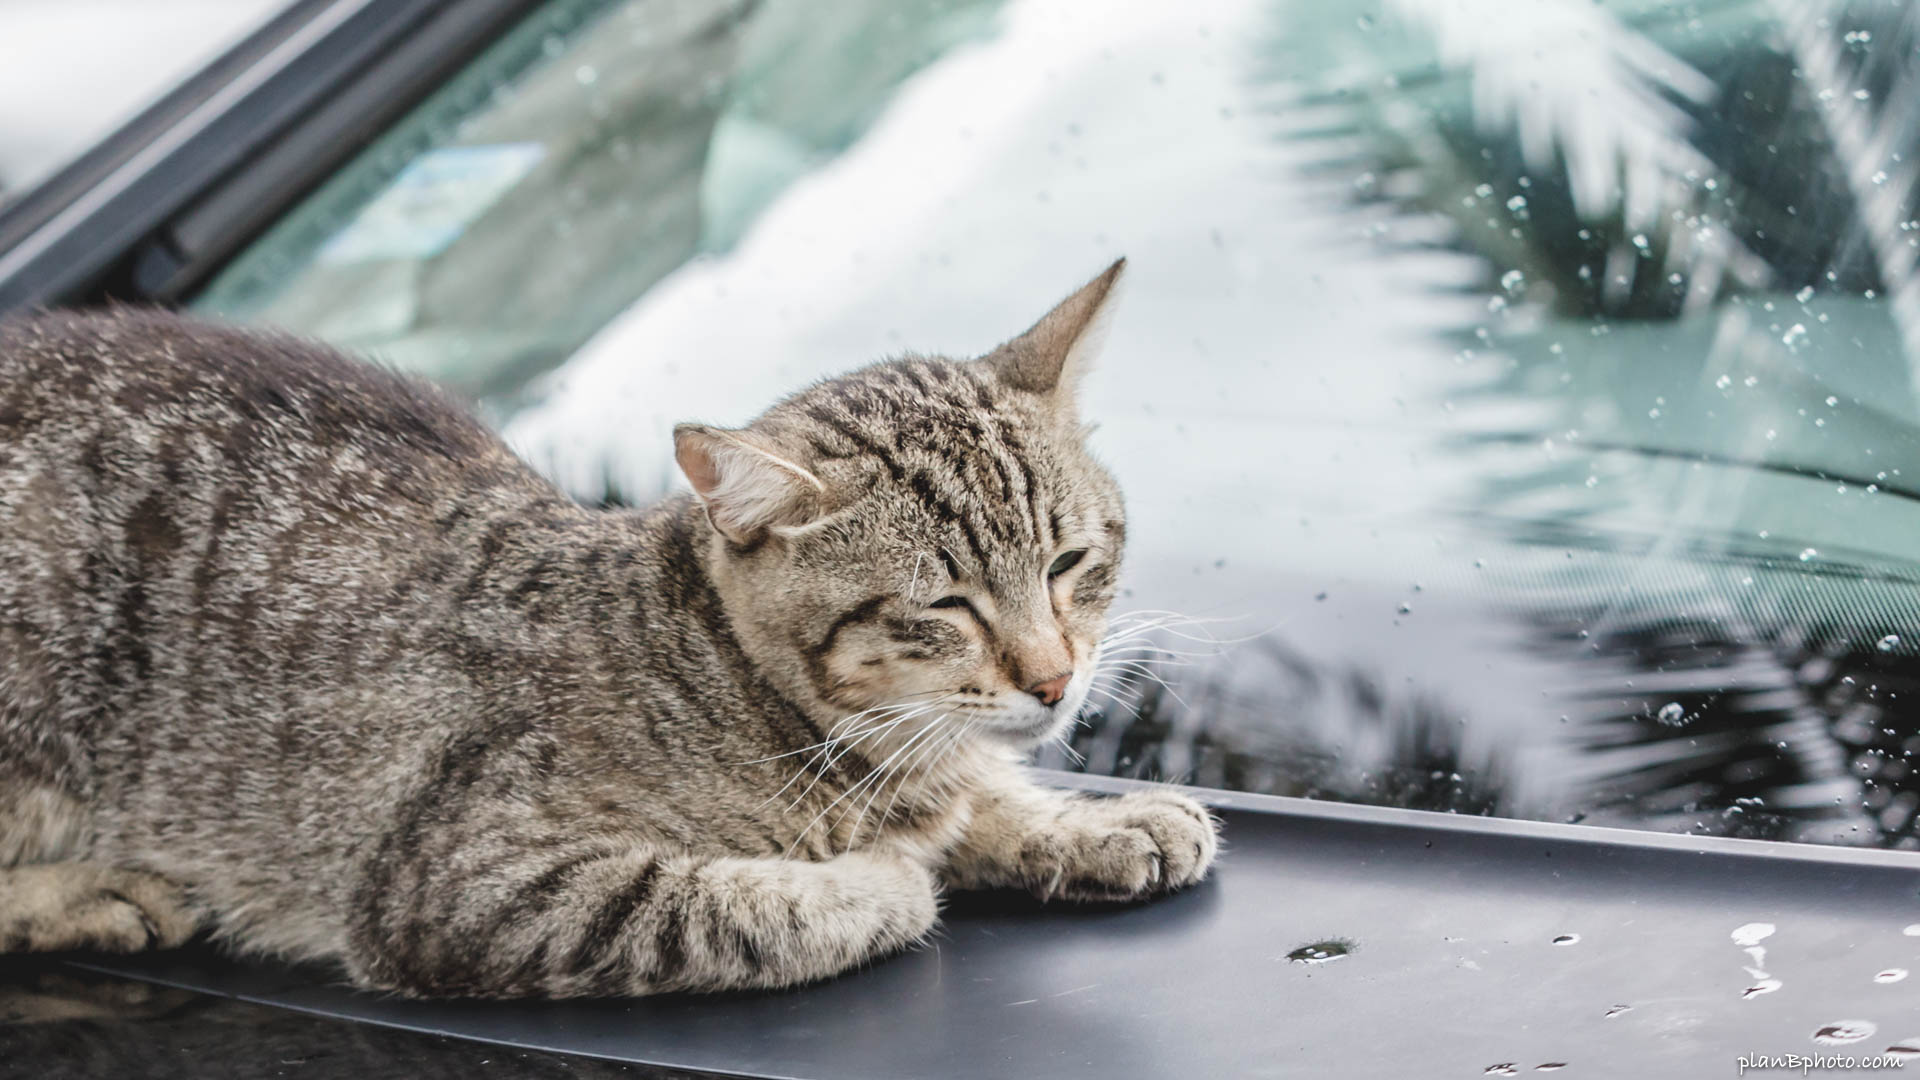 Cat sleeping on a car